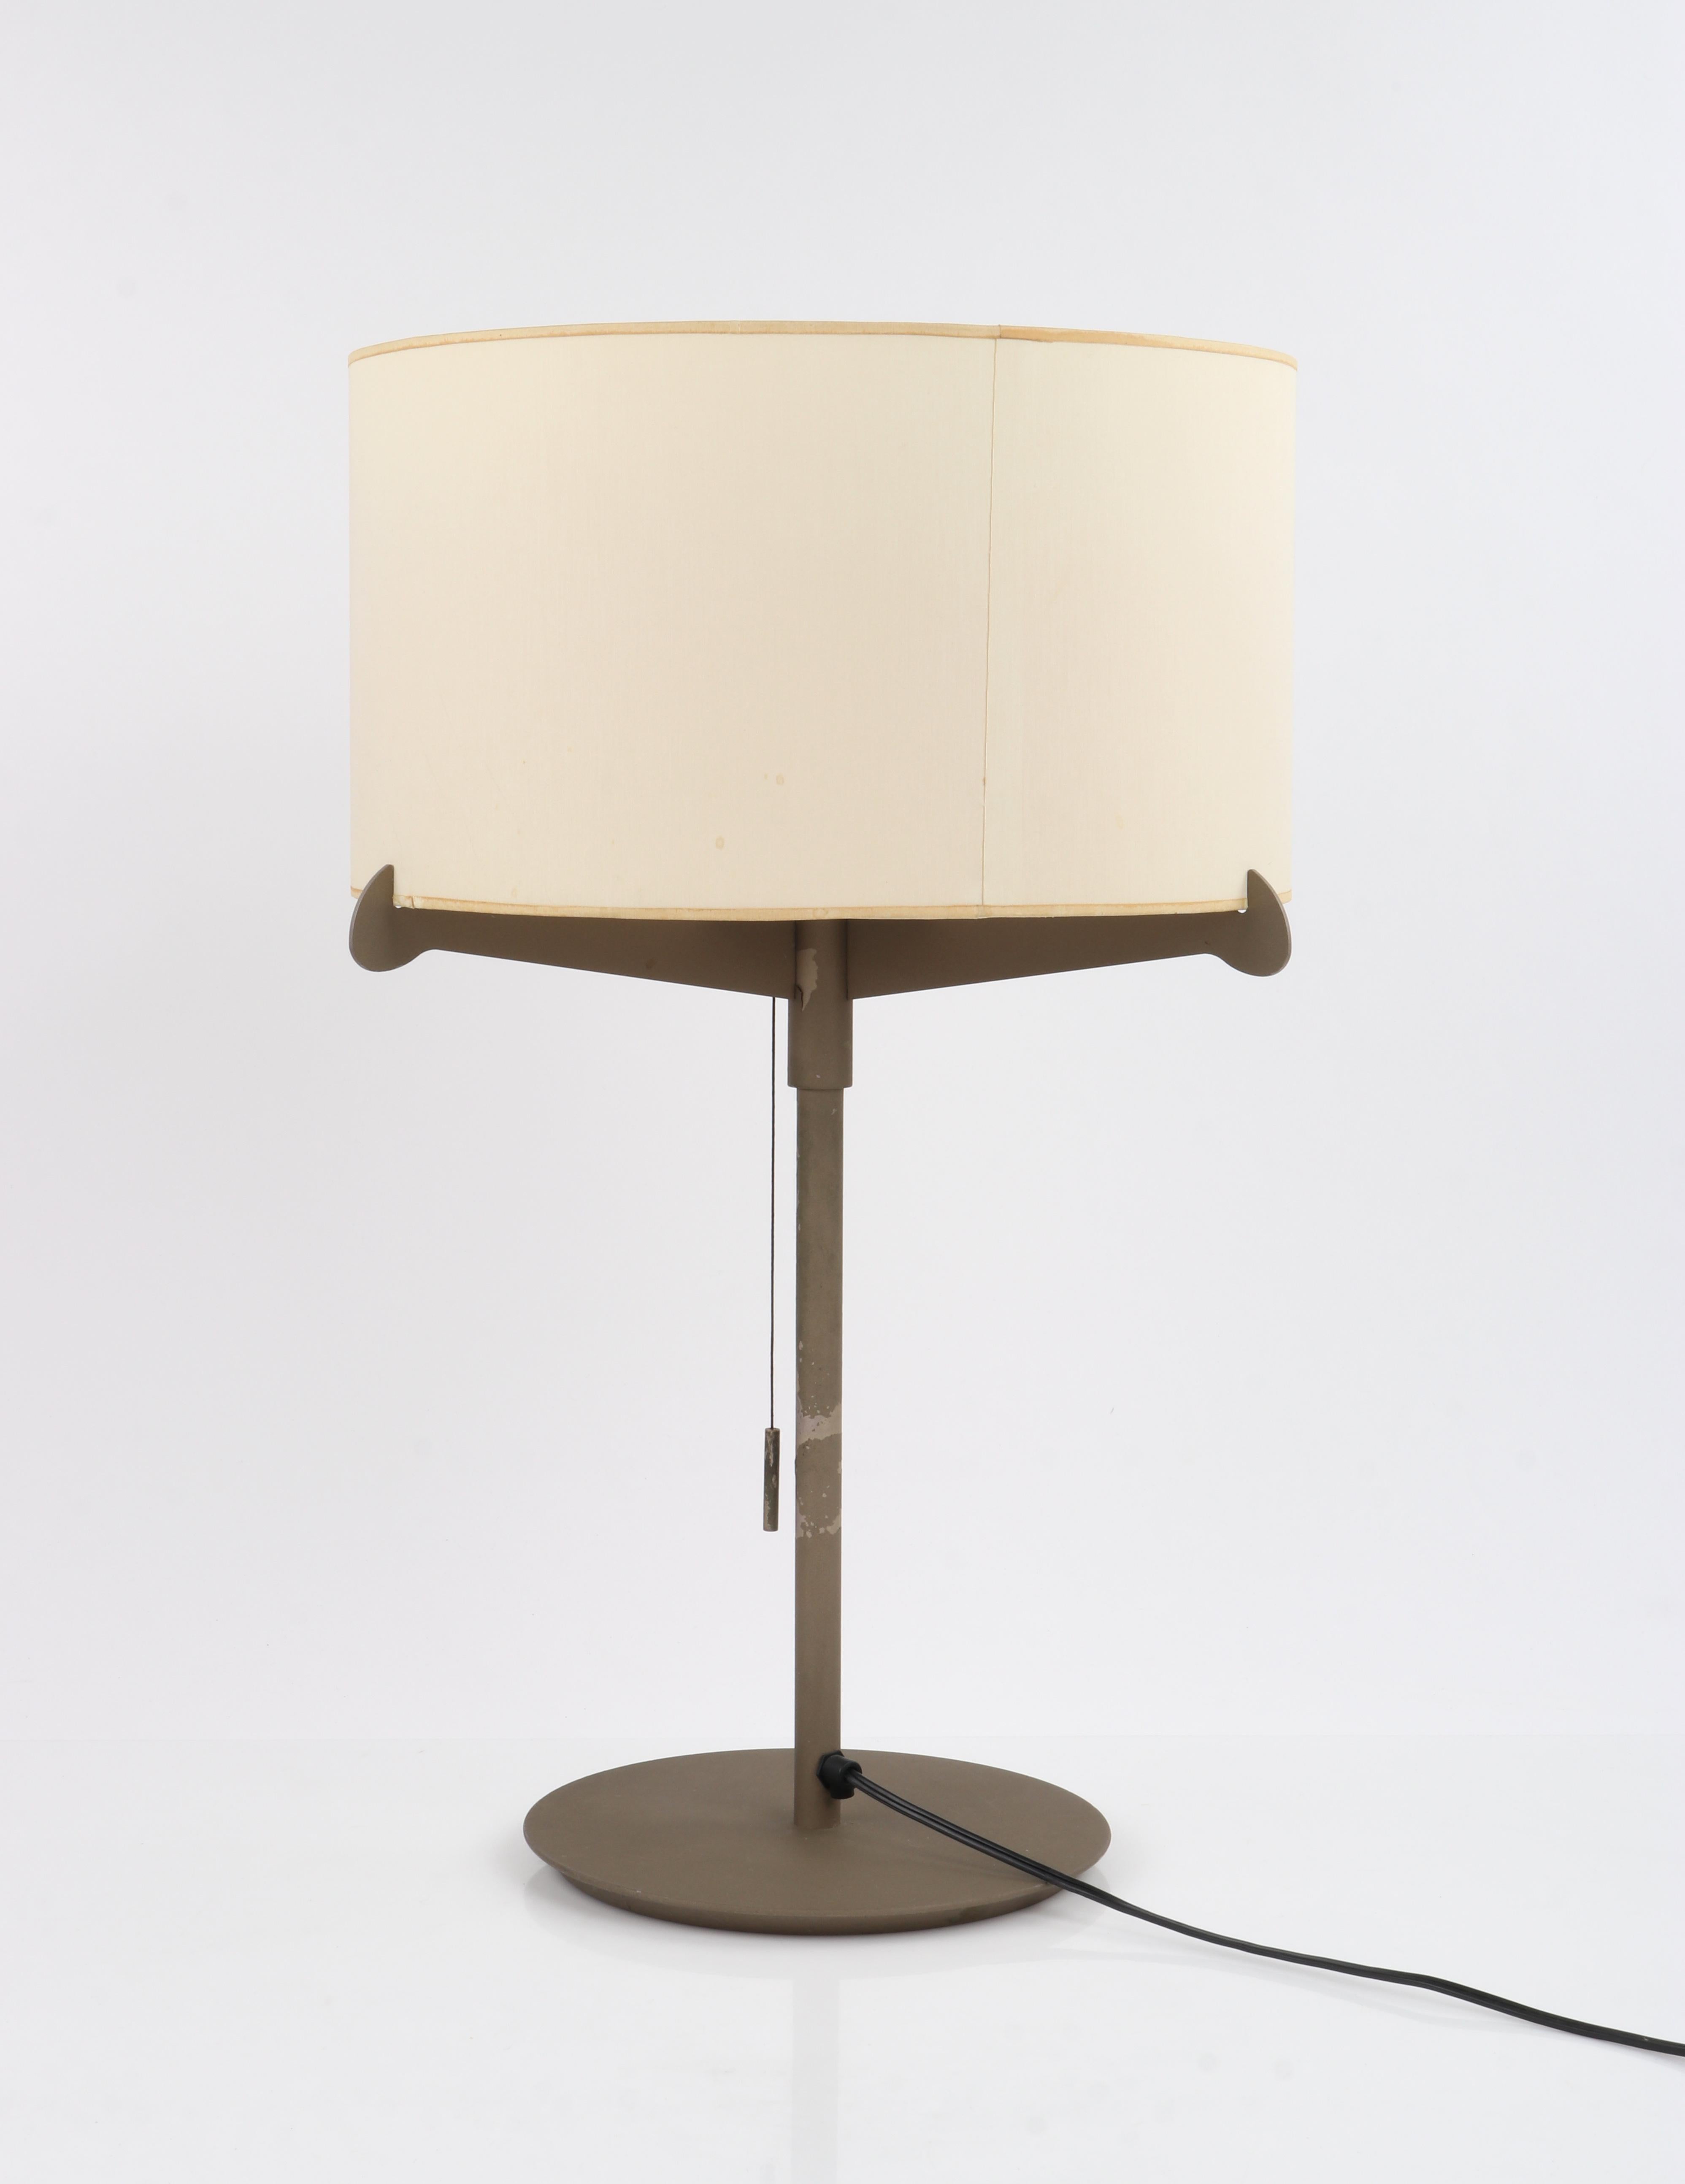 Carpyen Gabriel Teixido c.1974 Spanish Metal Cotton Shade Table Desk Light Lamp  5